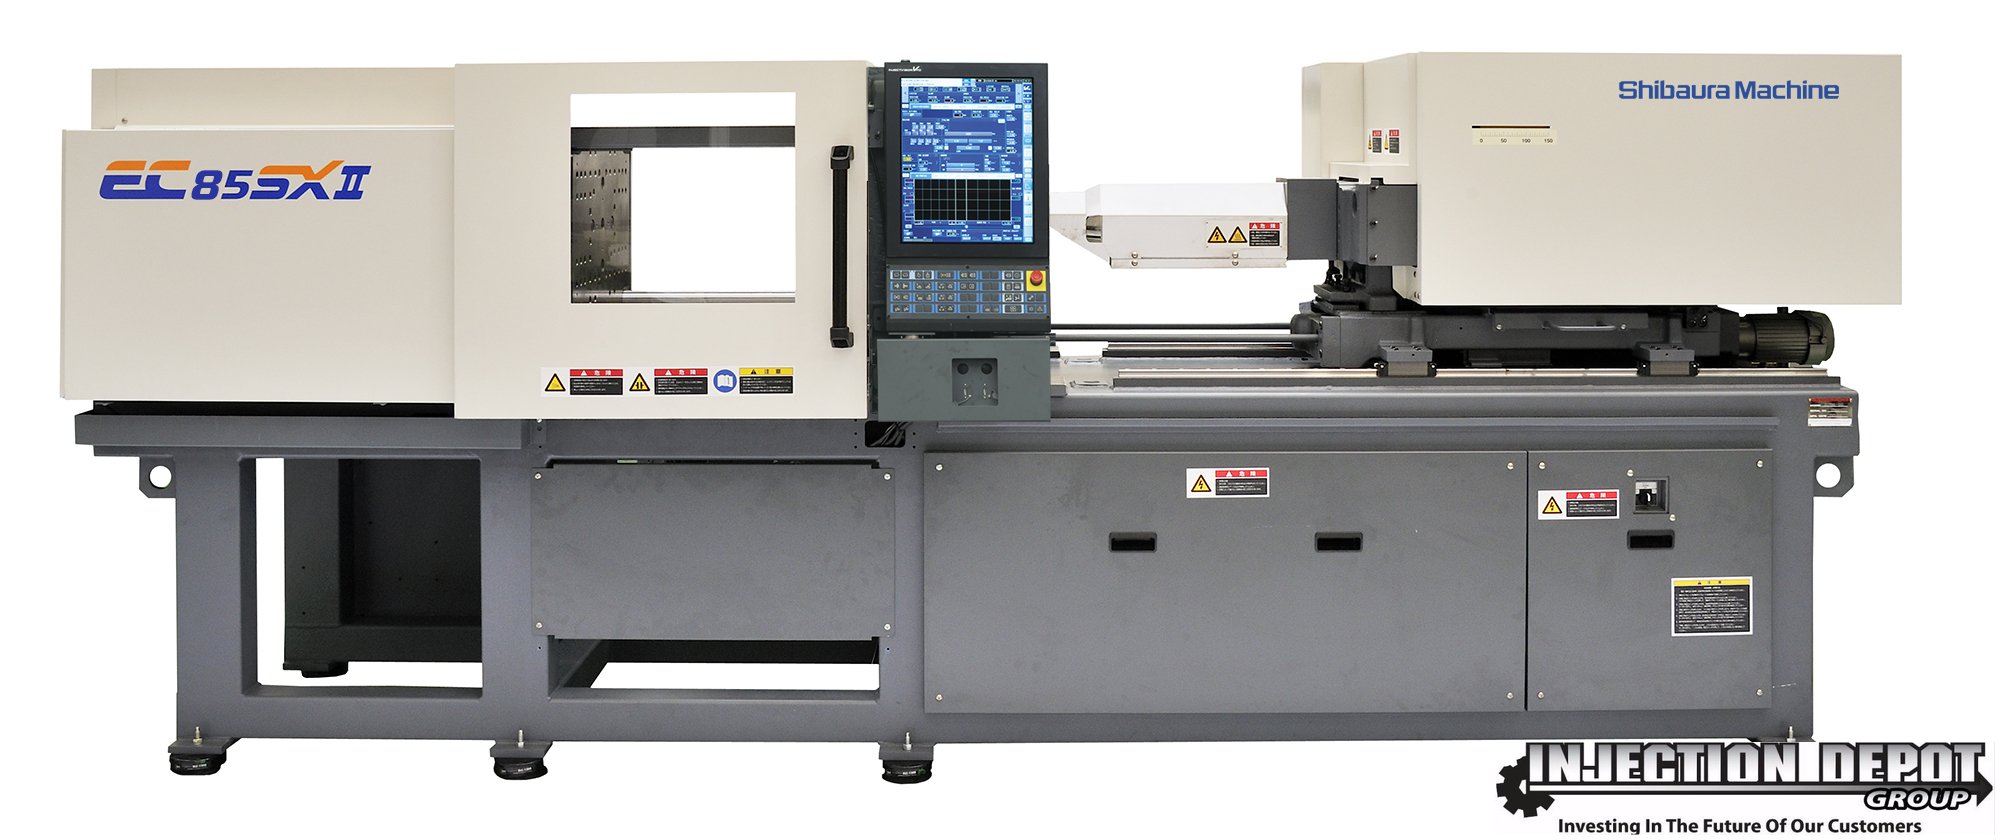 SHIBAURA MACHINE EC85SXIIIV70-U22 2Y Horizontal Injection Moulding Machines | INJECTION DEPOT GROUP